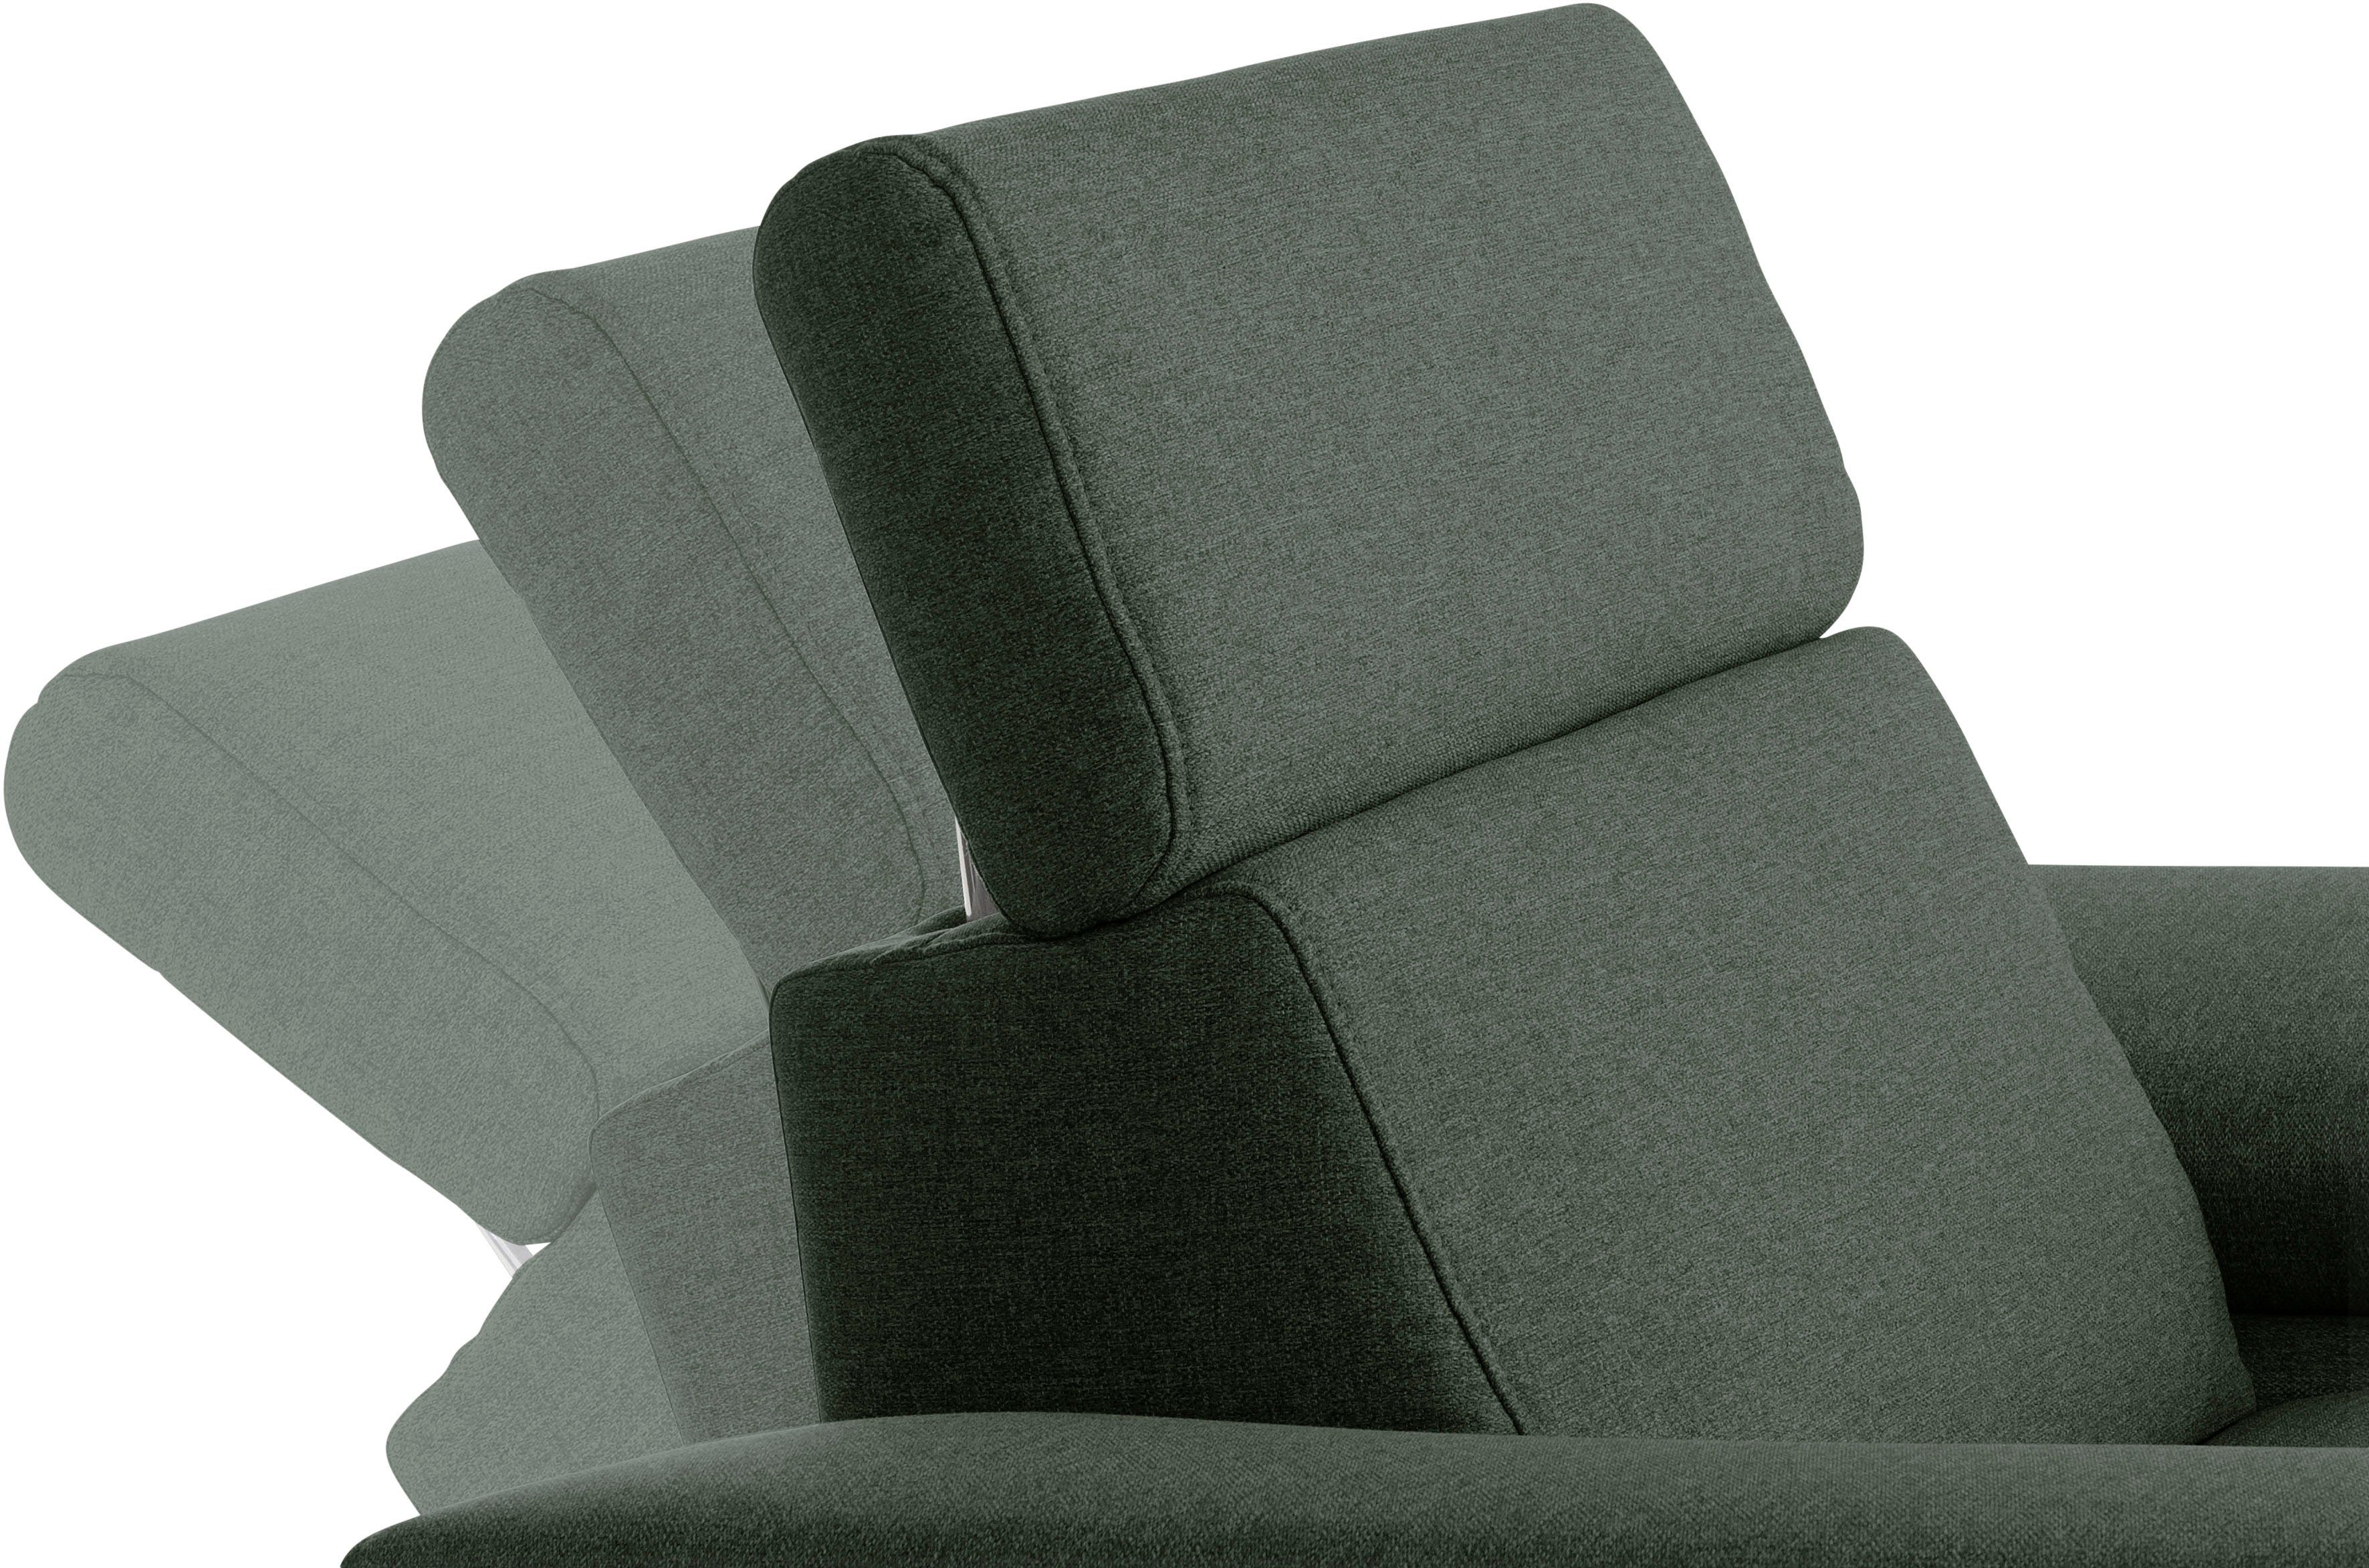 Places of Rückenverstellung, Lederoptik Luxus, Style in Sessel wahlweise Luxus-Microfaser Trapino mit